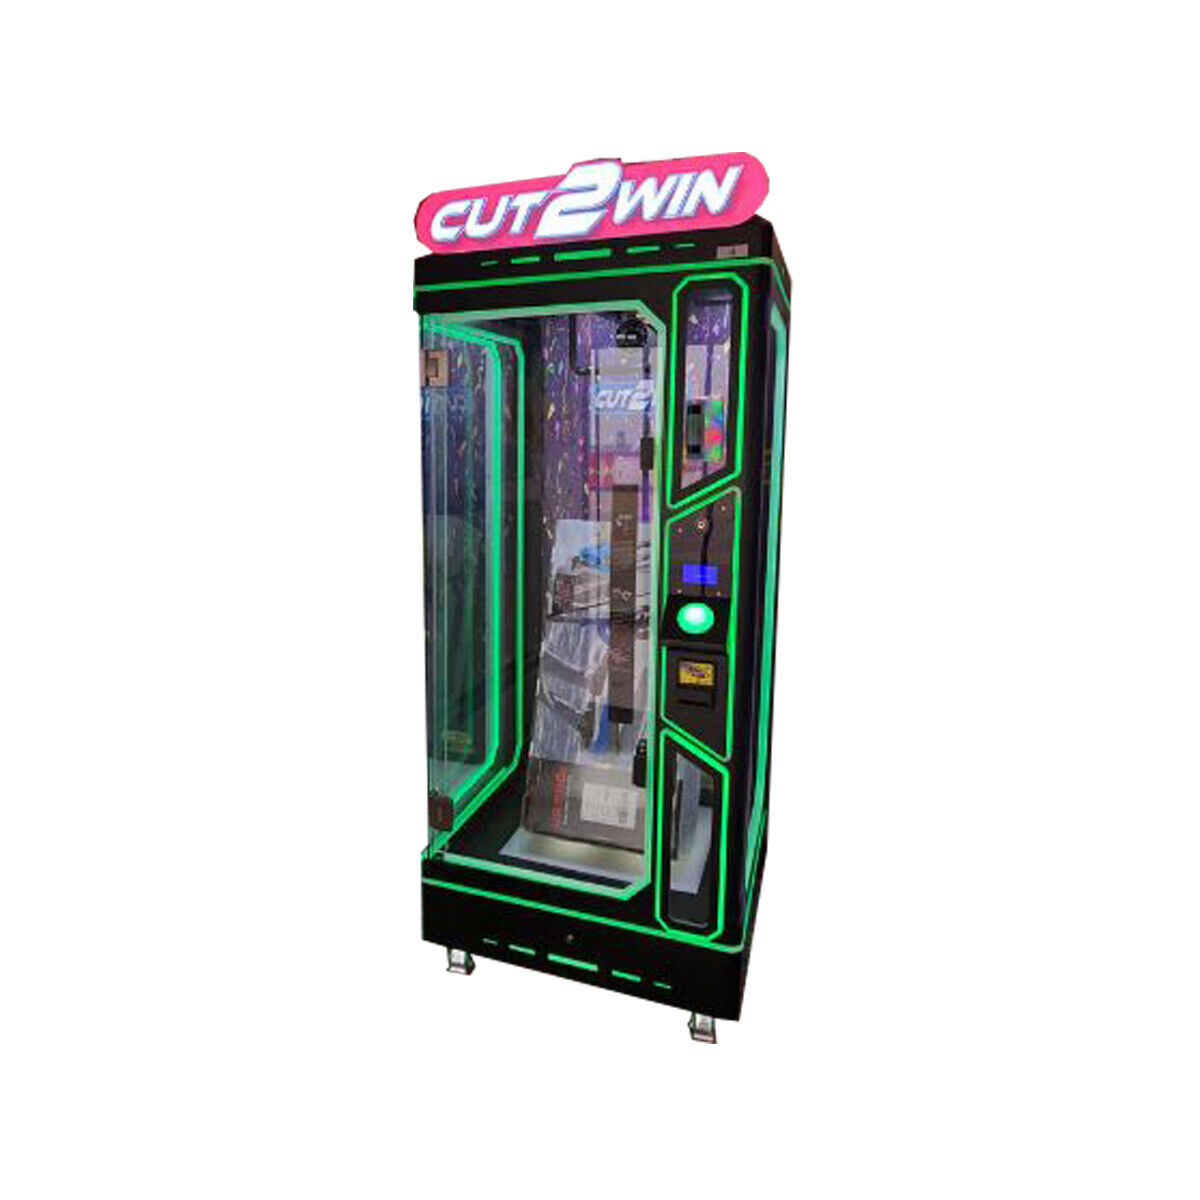 Cut 2 Win Arcade Skill Game - Deluxe Cabinet